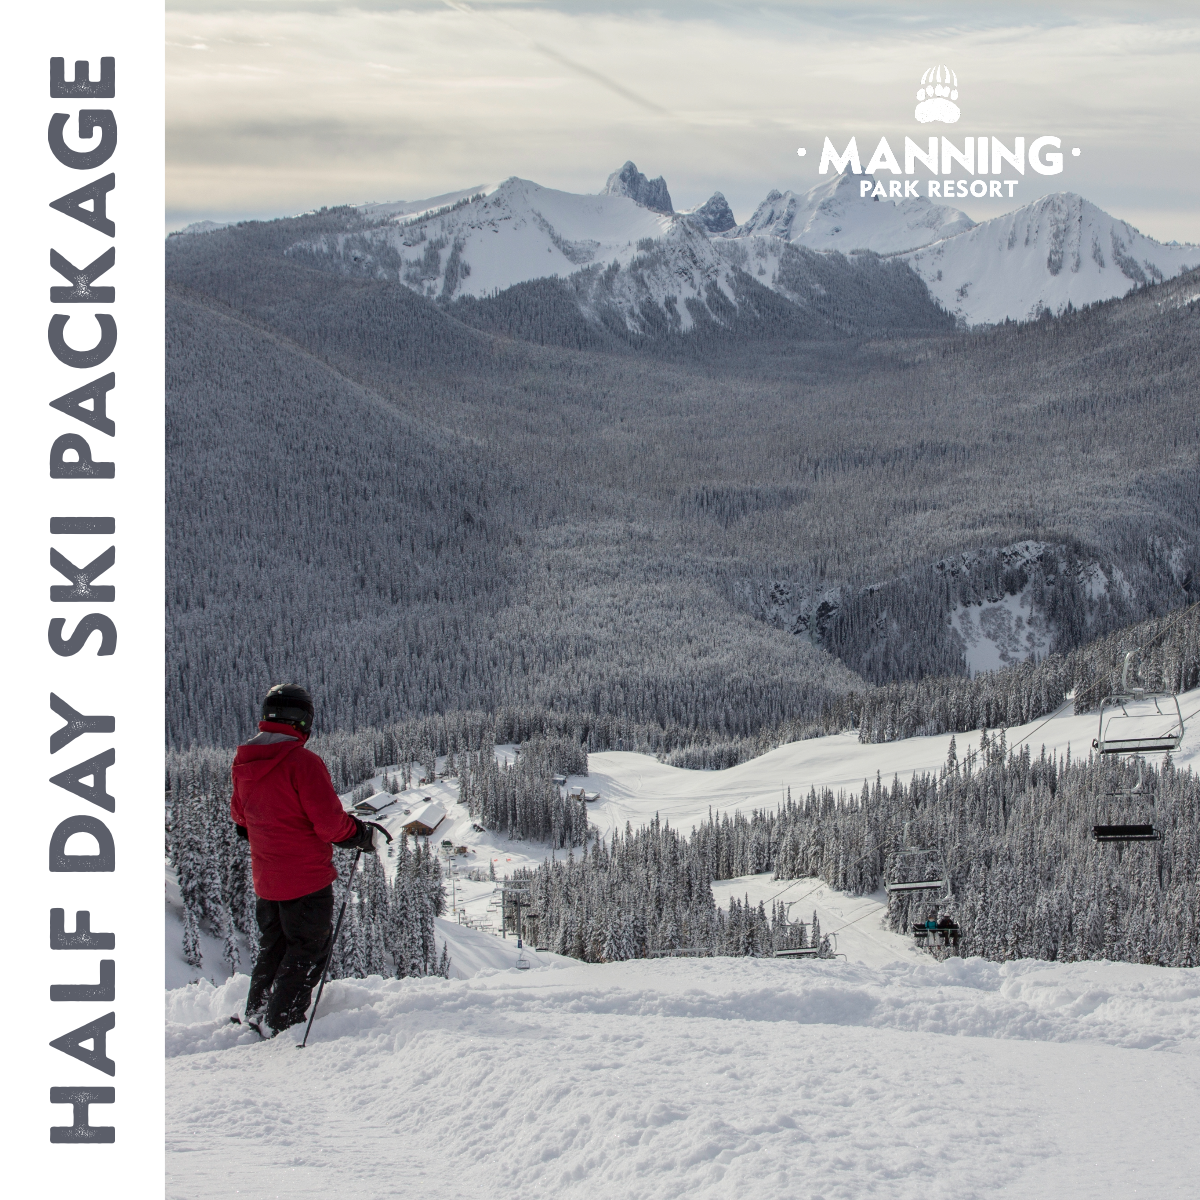 Half Day Ski Rental Package